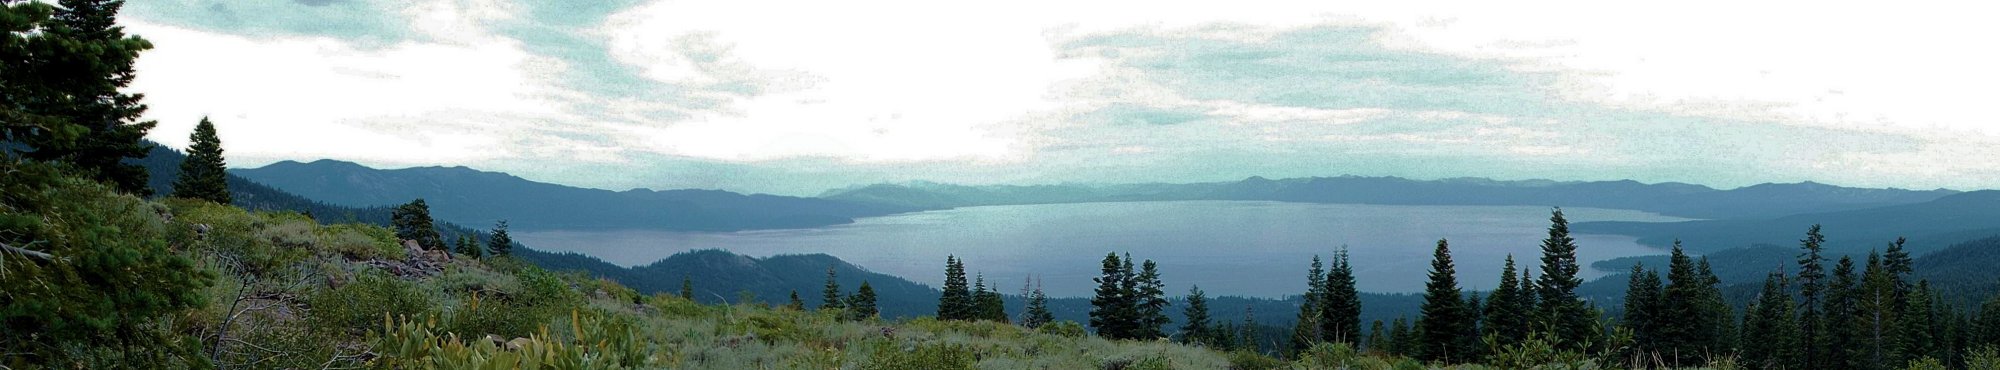 Lake Tahoe Overlook